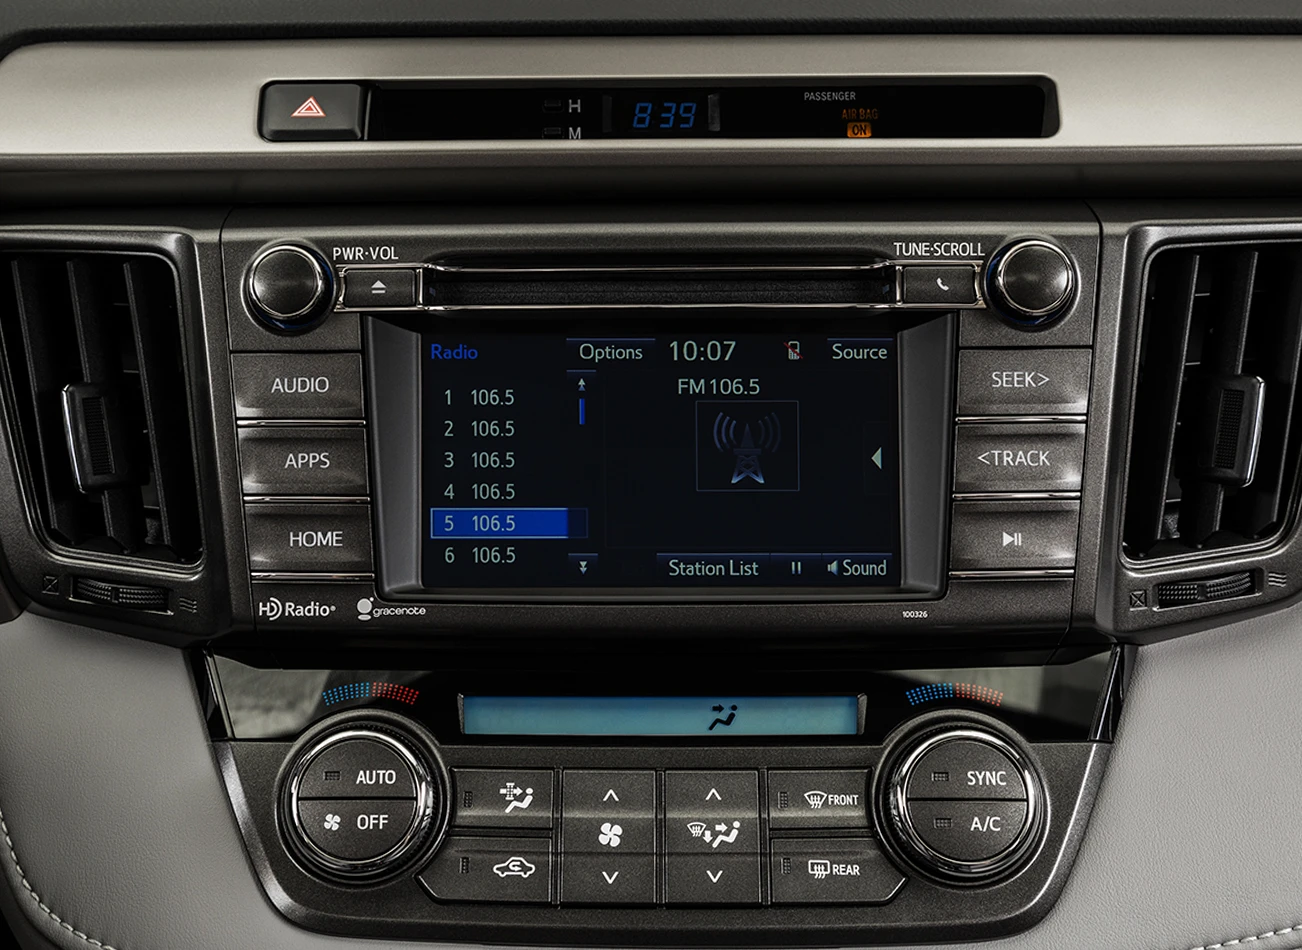 2015 Toyota RAV4: Reviews, Photos, and More: Reasons to Buy #4 | CarMax